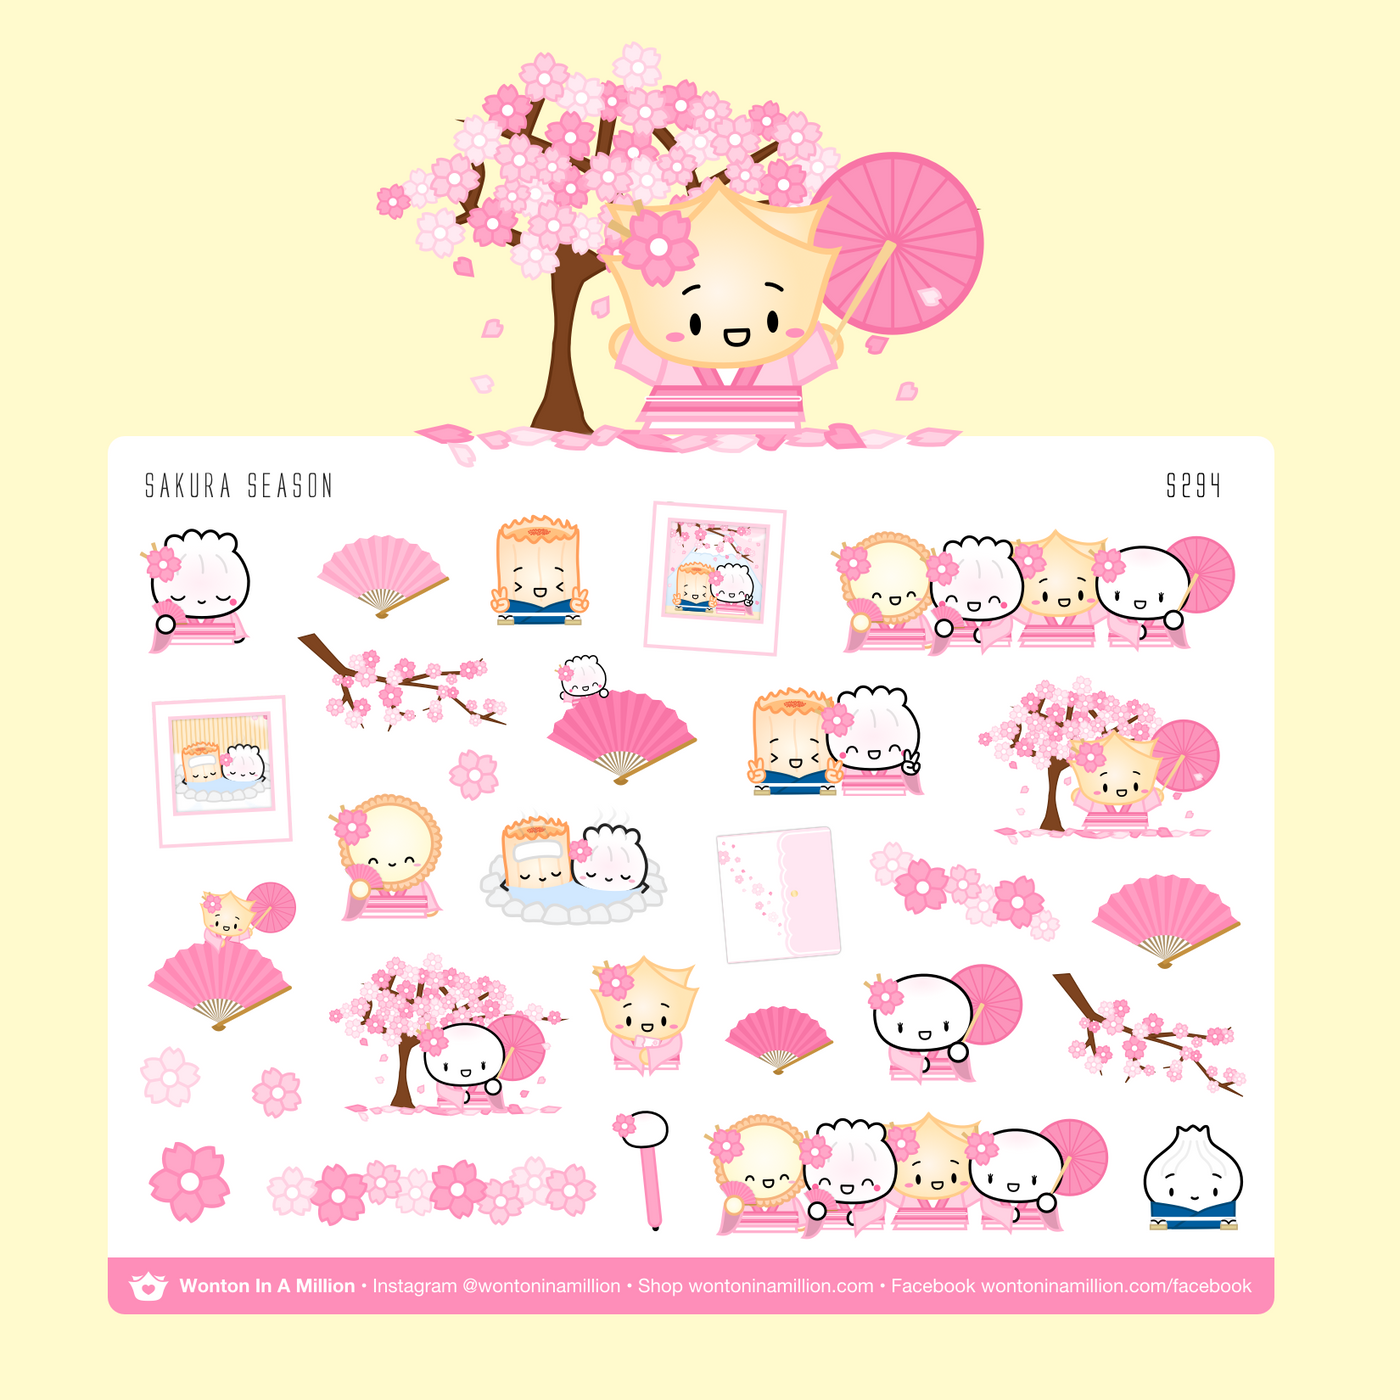 S294 | Sakura Season Stickers